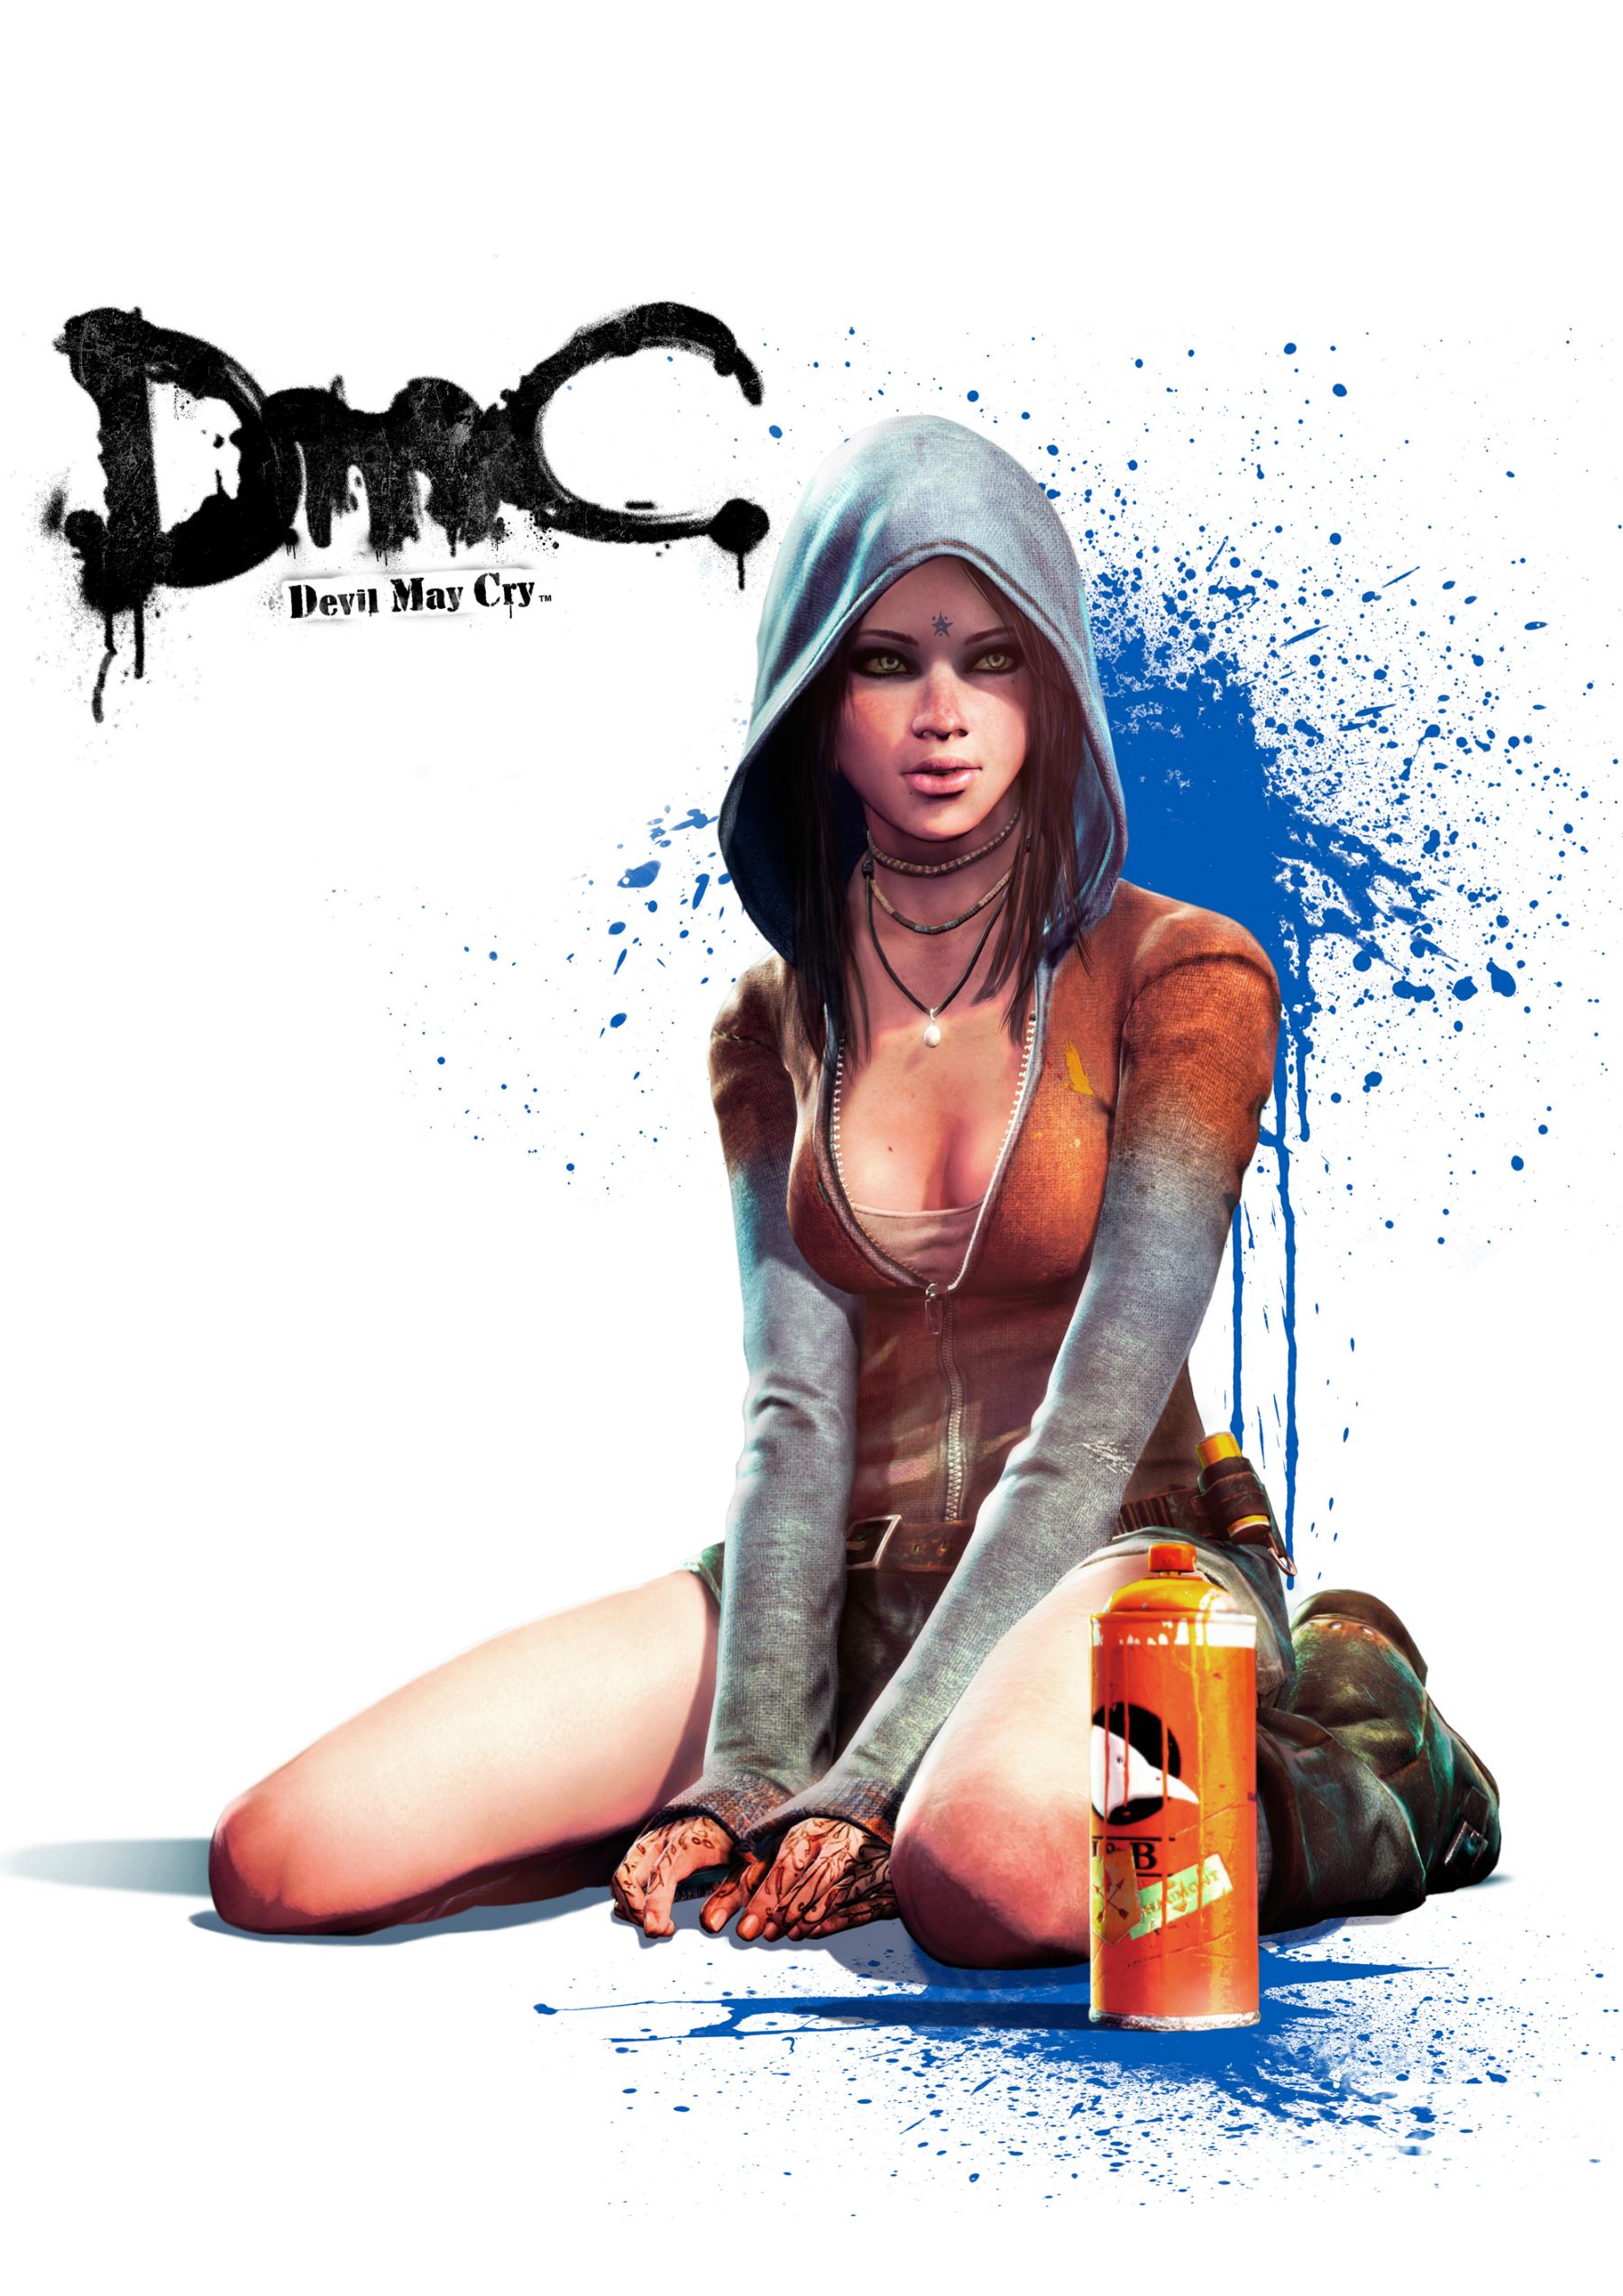 DmC: Devil May Cry Kat psychic character artwork